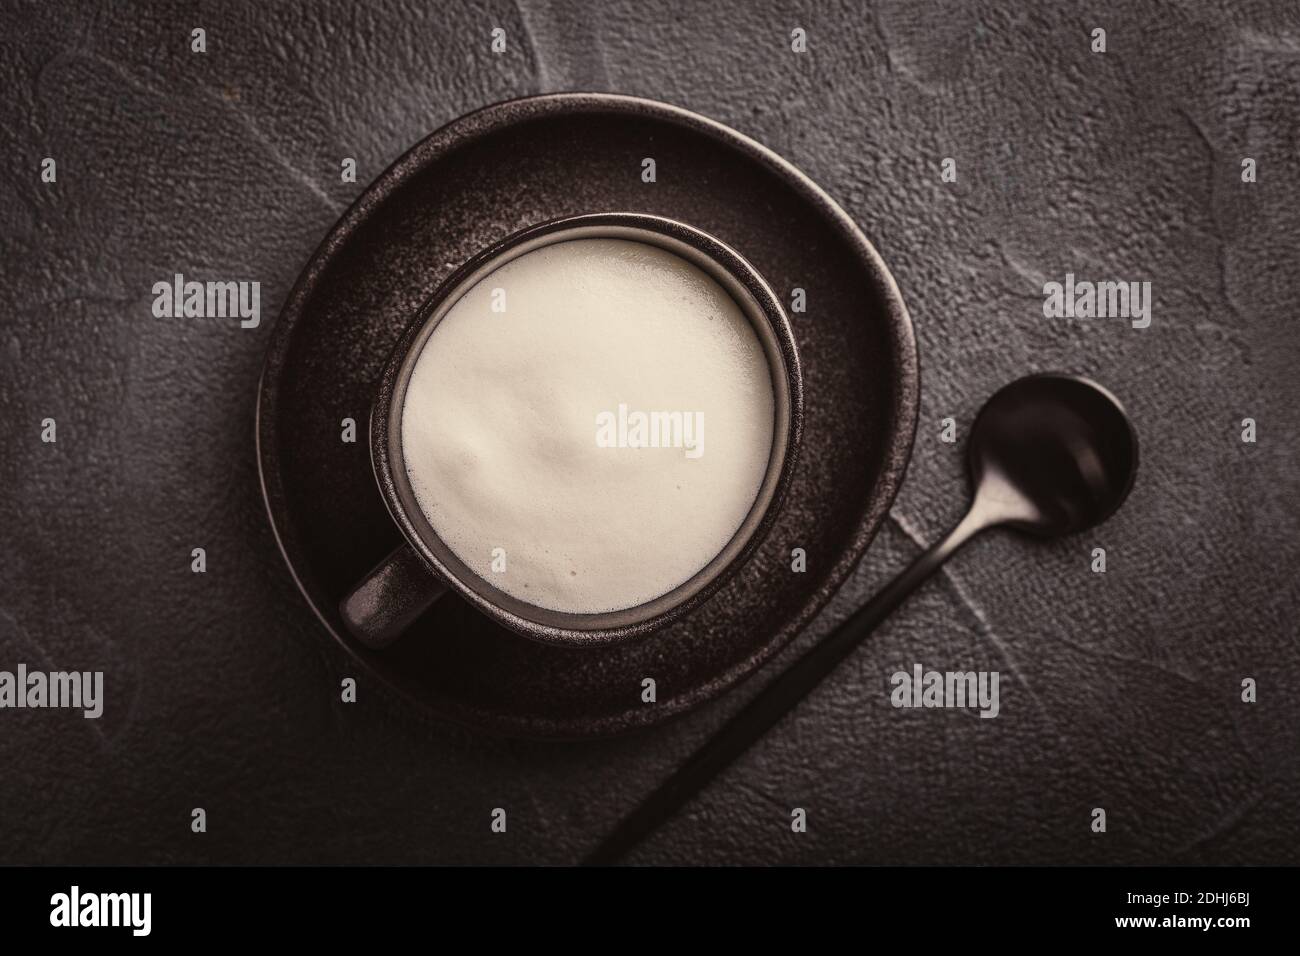 Cappuccino on black background. Stock Photo